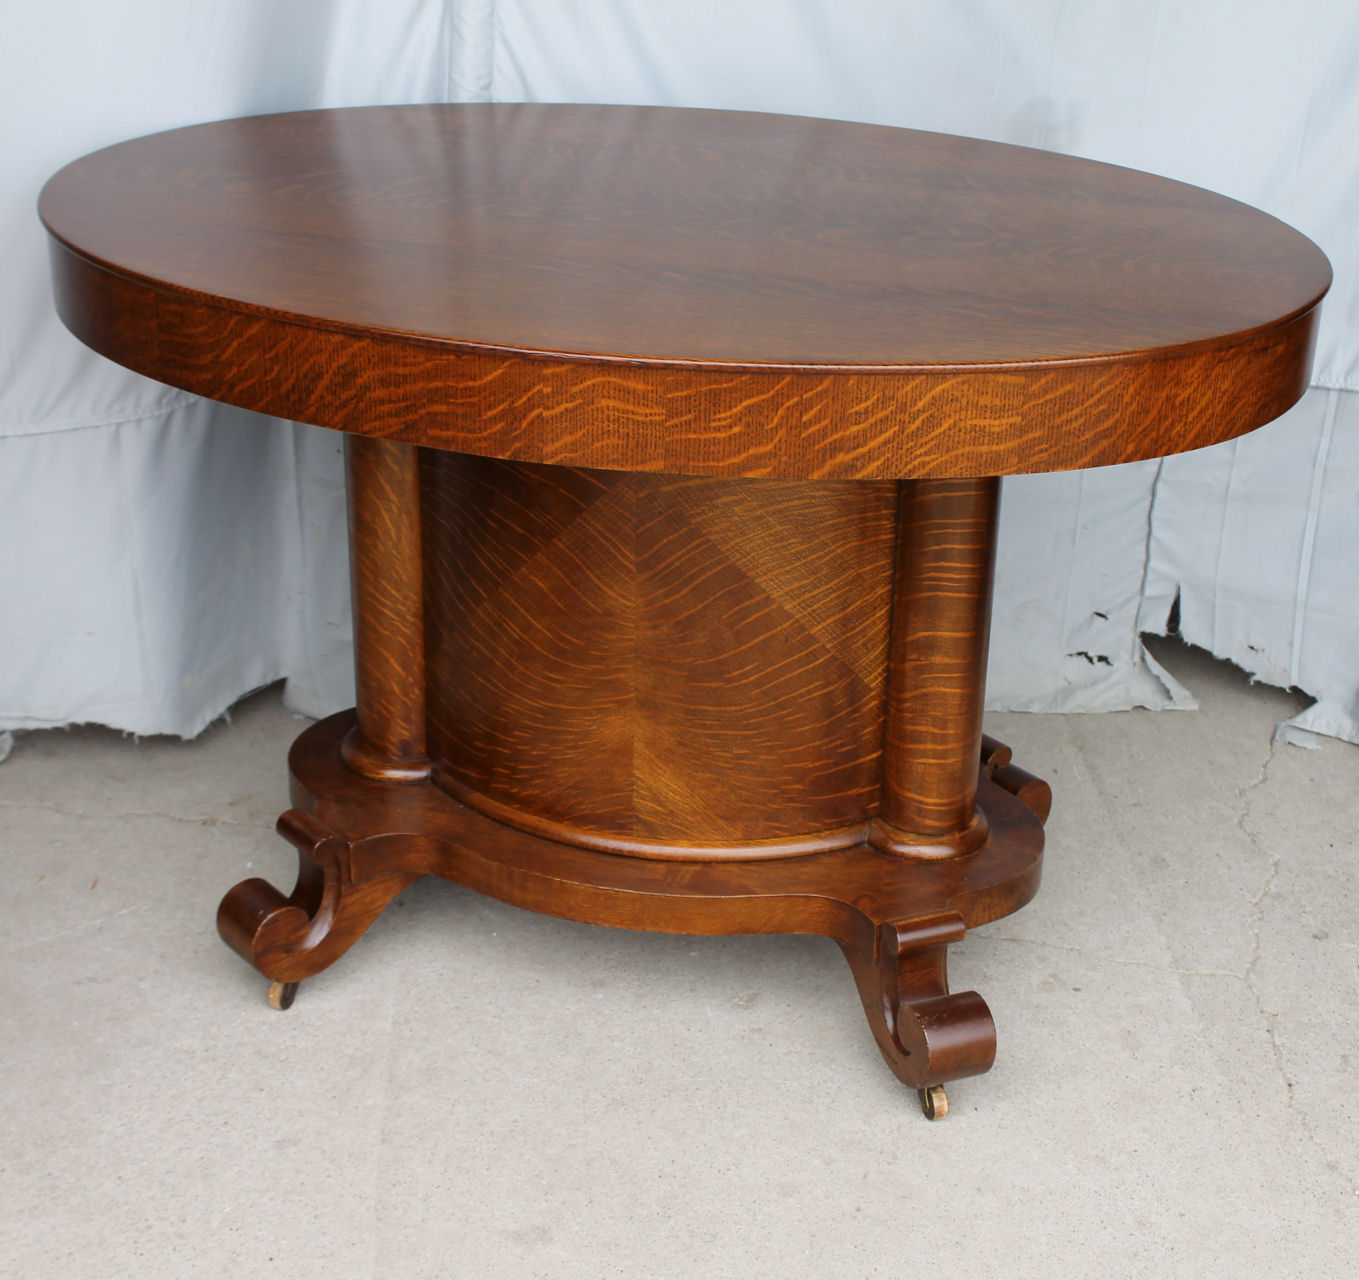 Bargain John S Antiques Antique Oak Oval Shaped Library Table